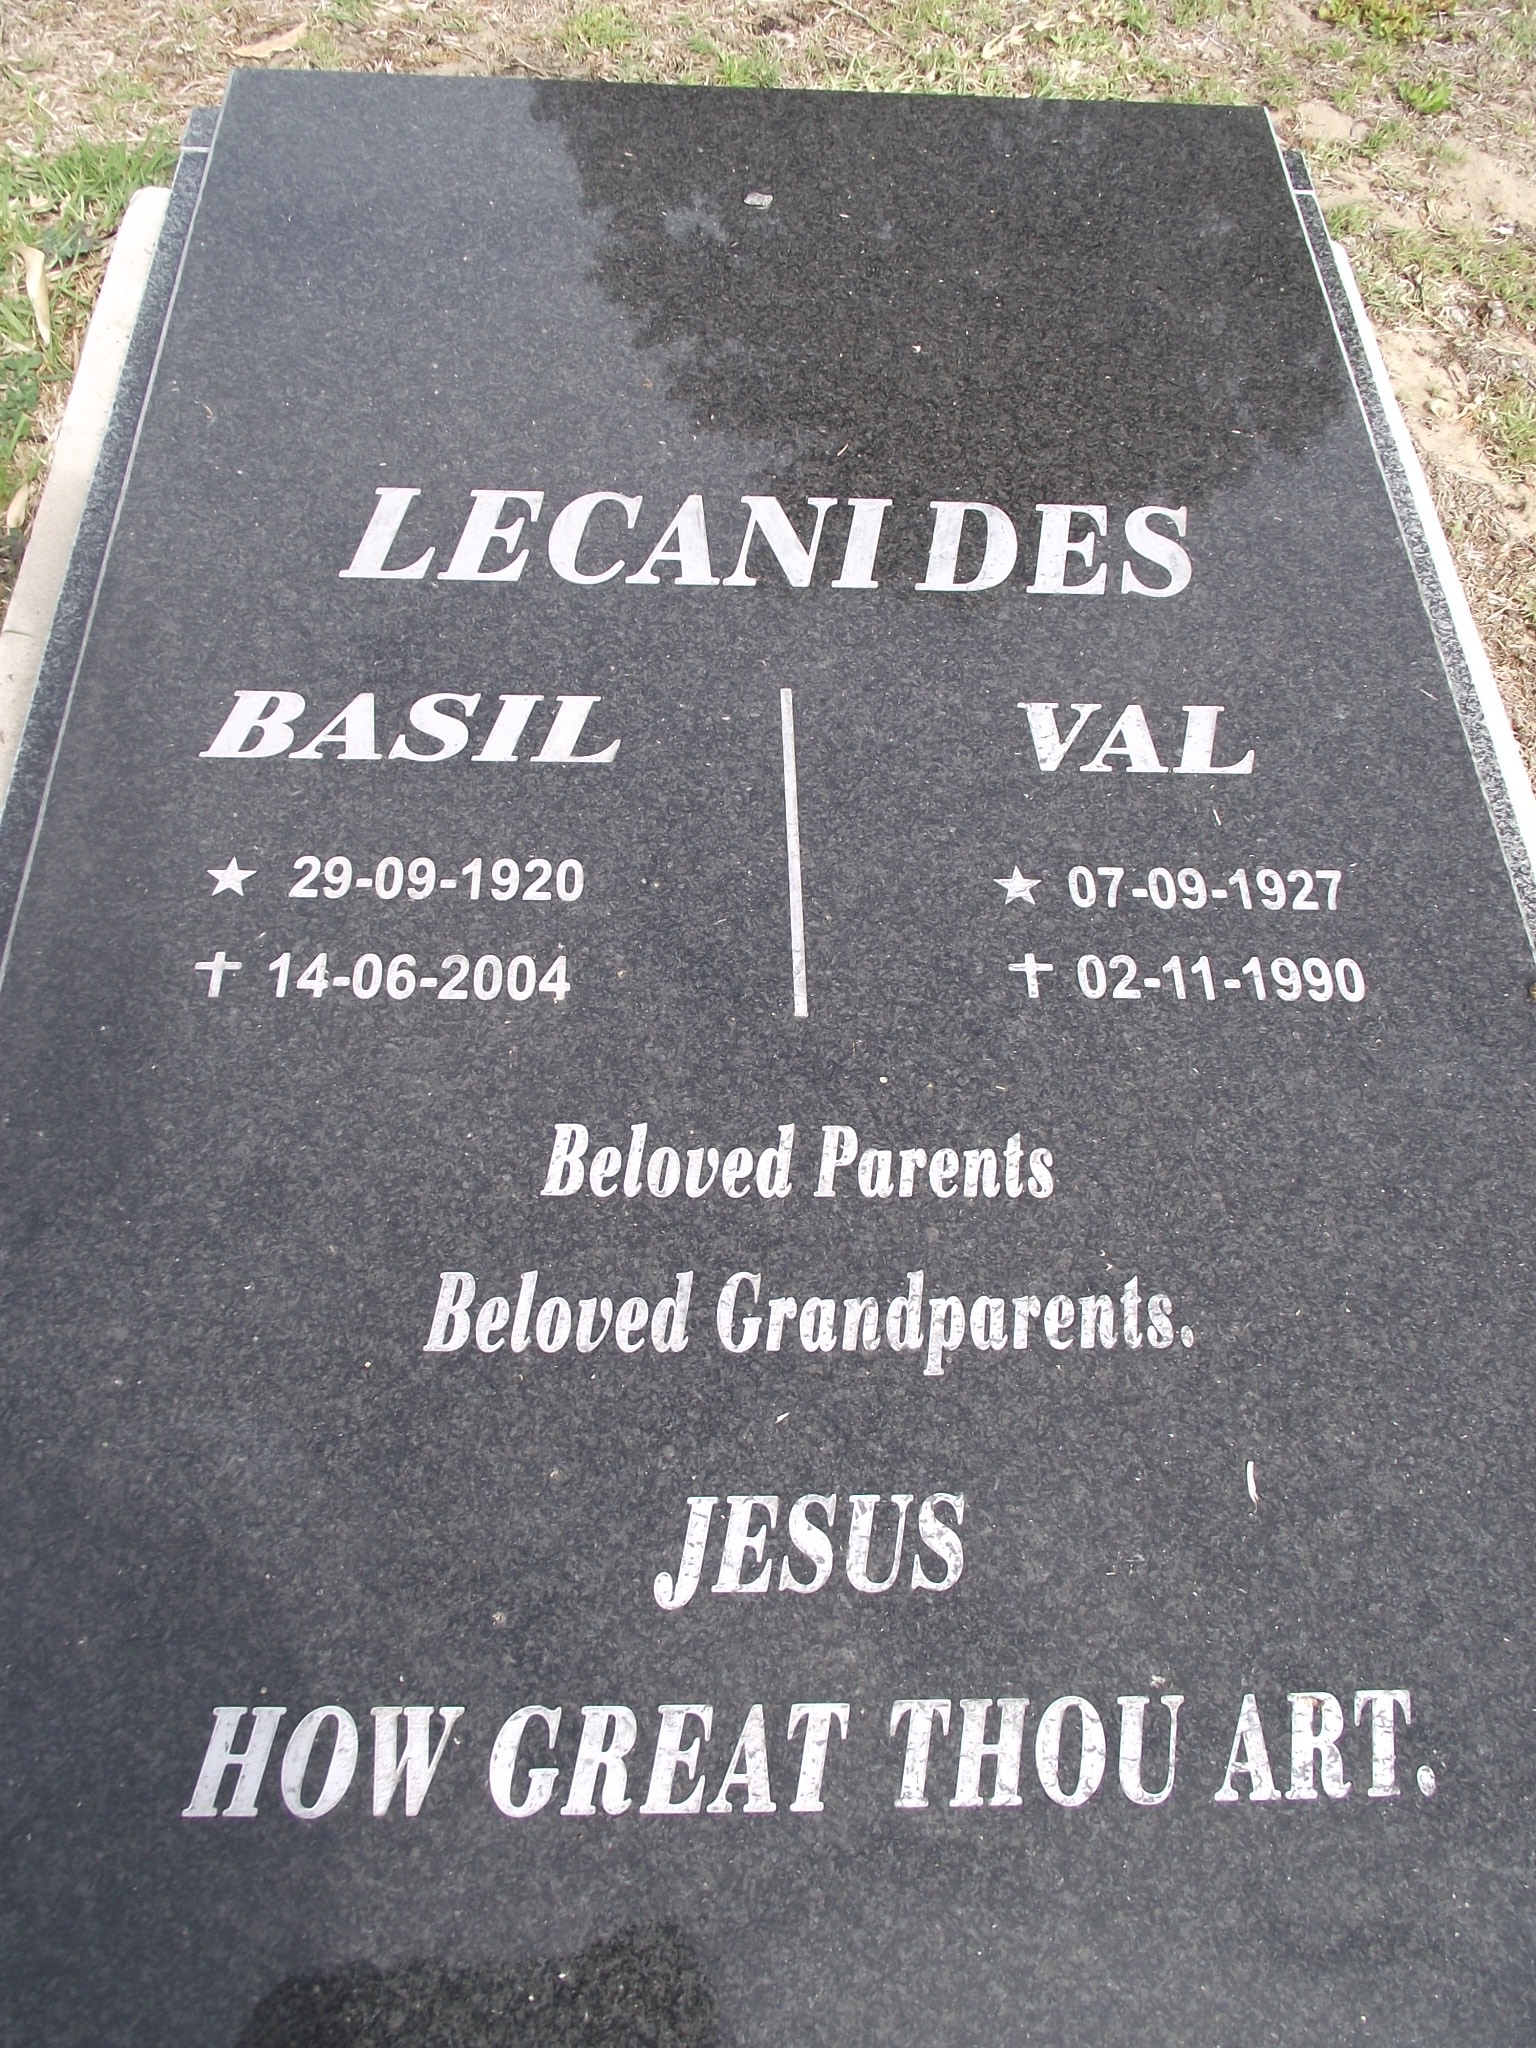 LECANIDES Basil 1920-2004 & Val 1927-1990